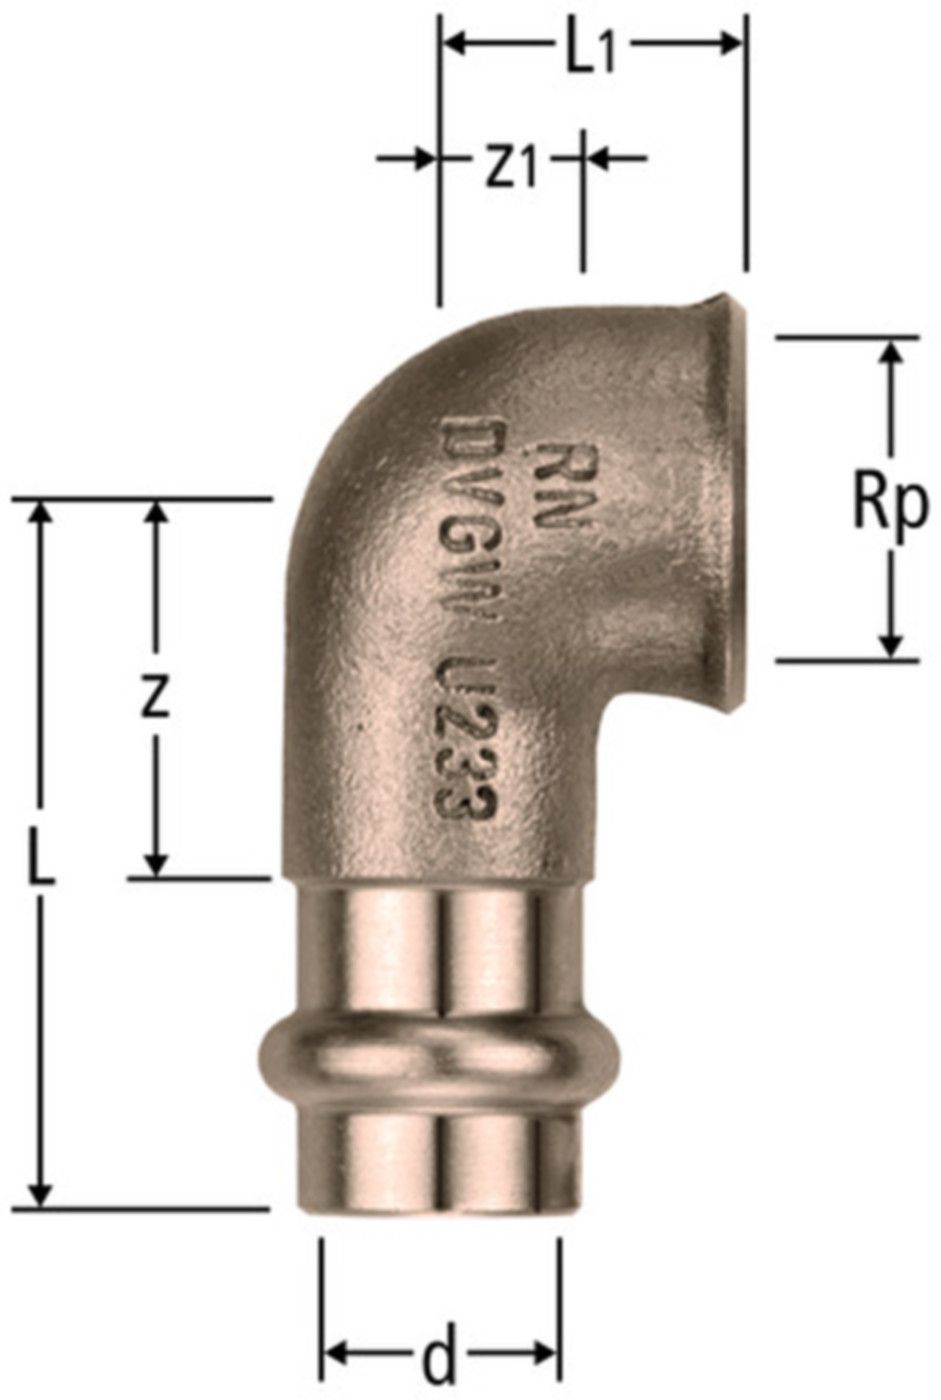 Winkel mit IG 22 x 3/4" 81006.27 - Nussbaum-Optipress-Rotguss-Fittings